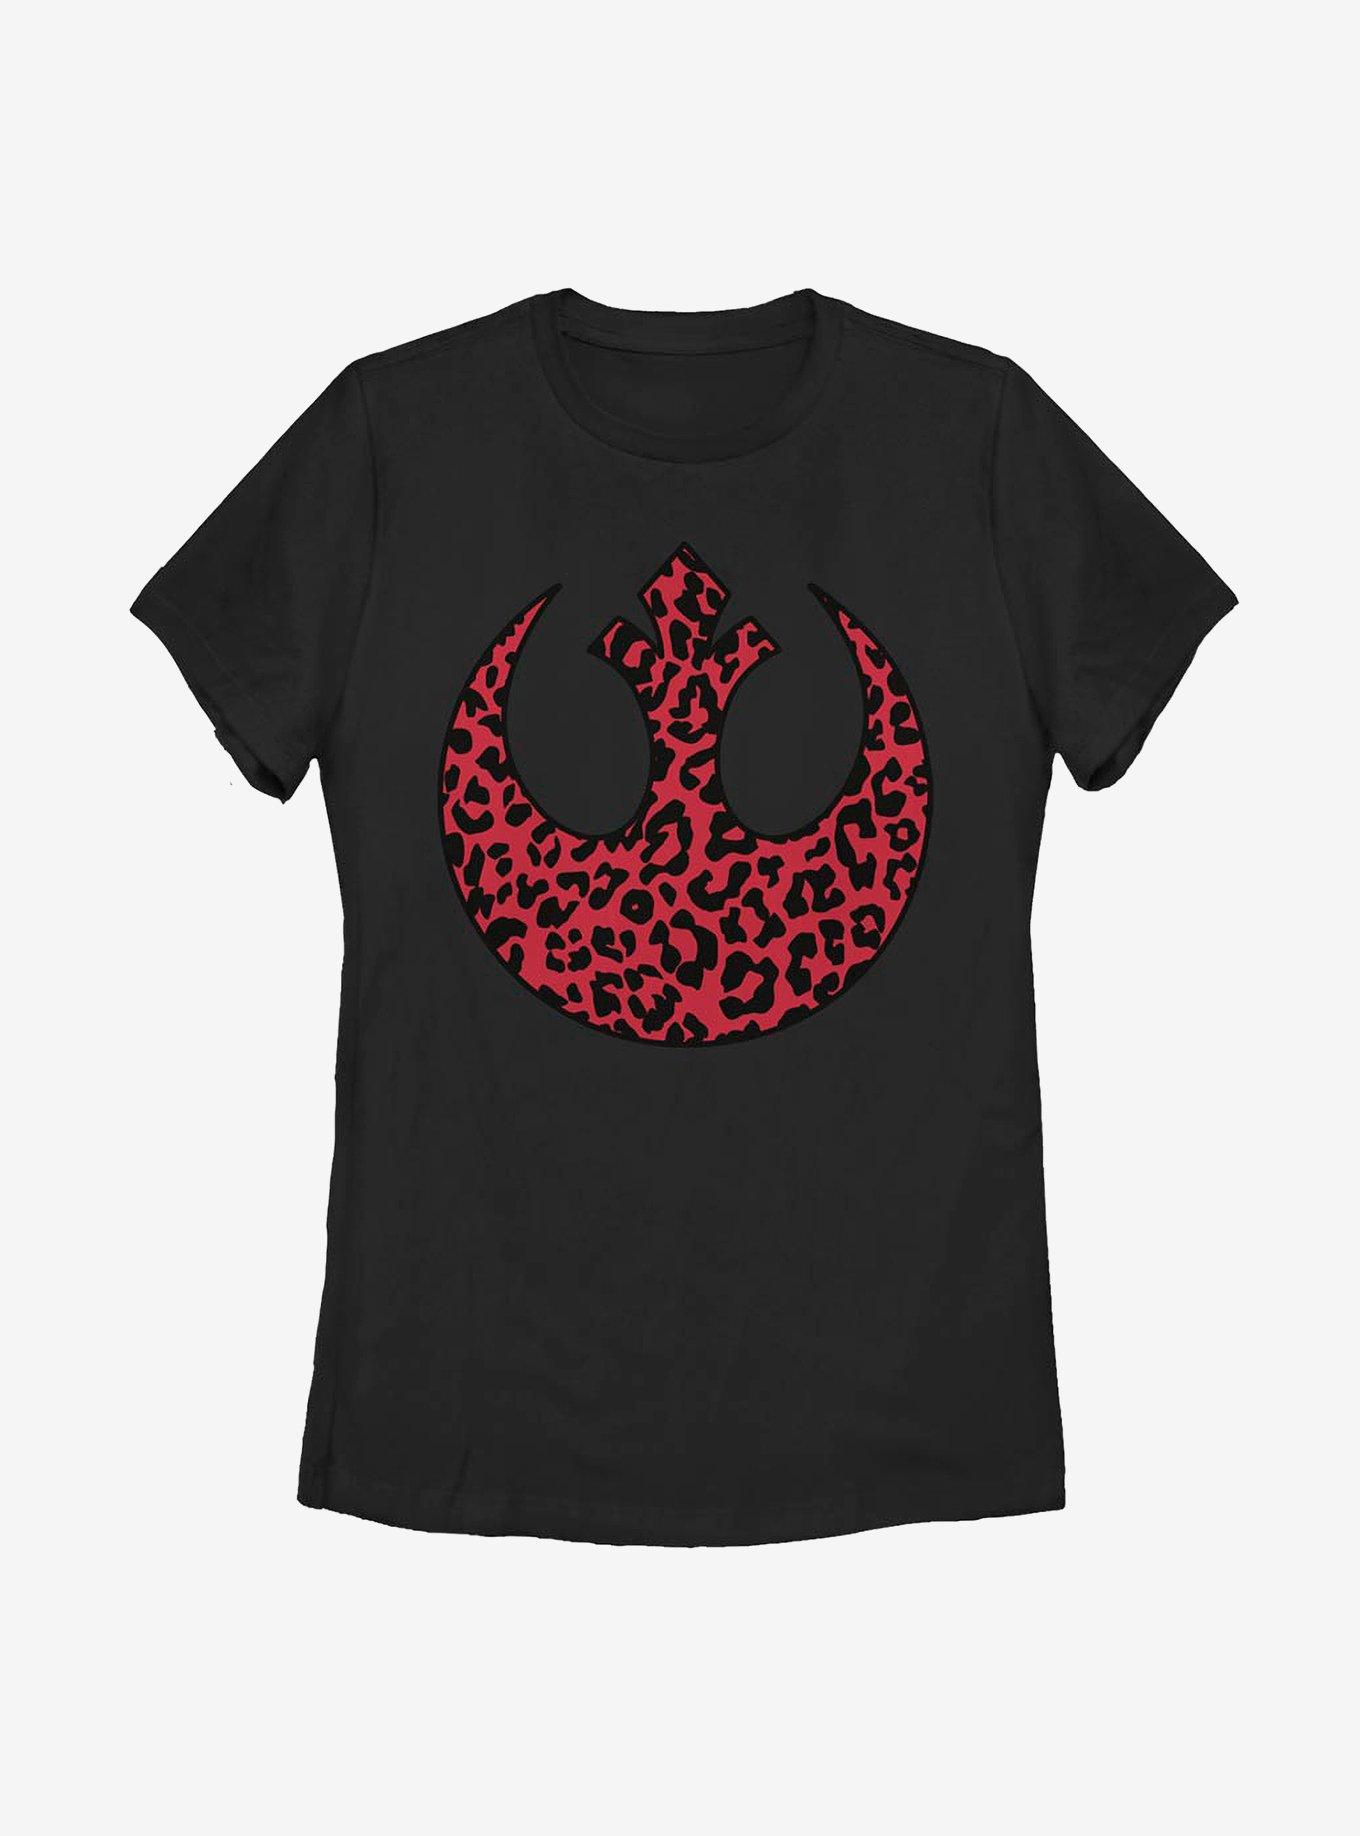 Star Wars Rebel Icon Cheetah Womens T-Shirt, BLACK, hi-res